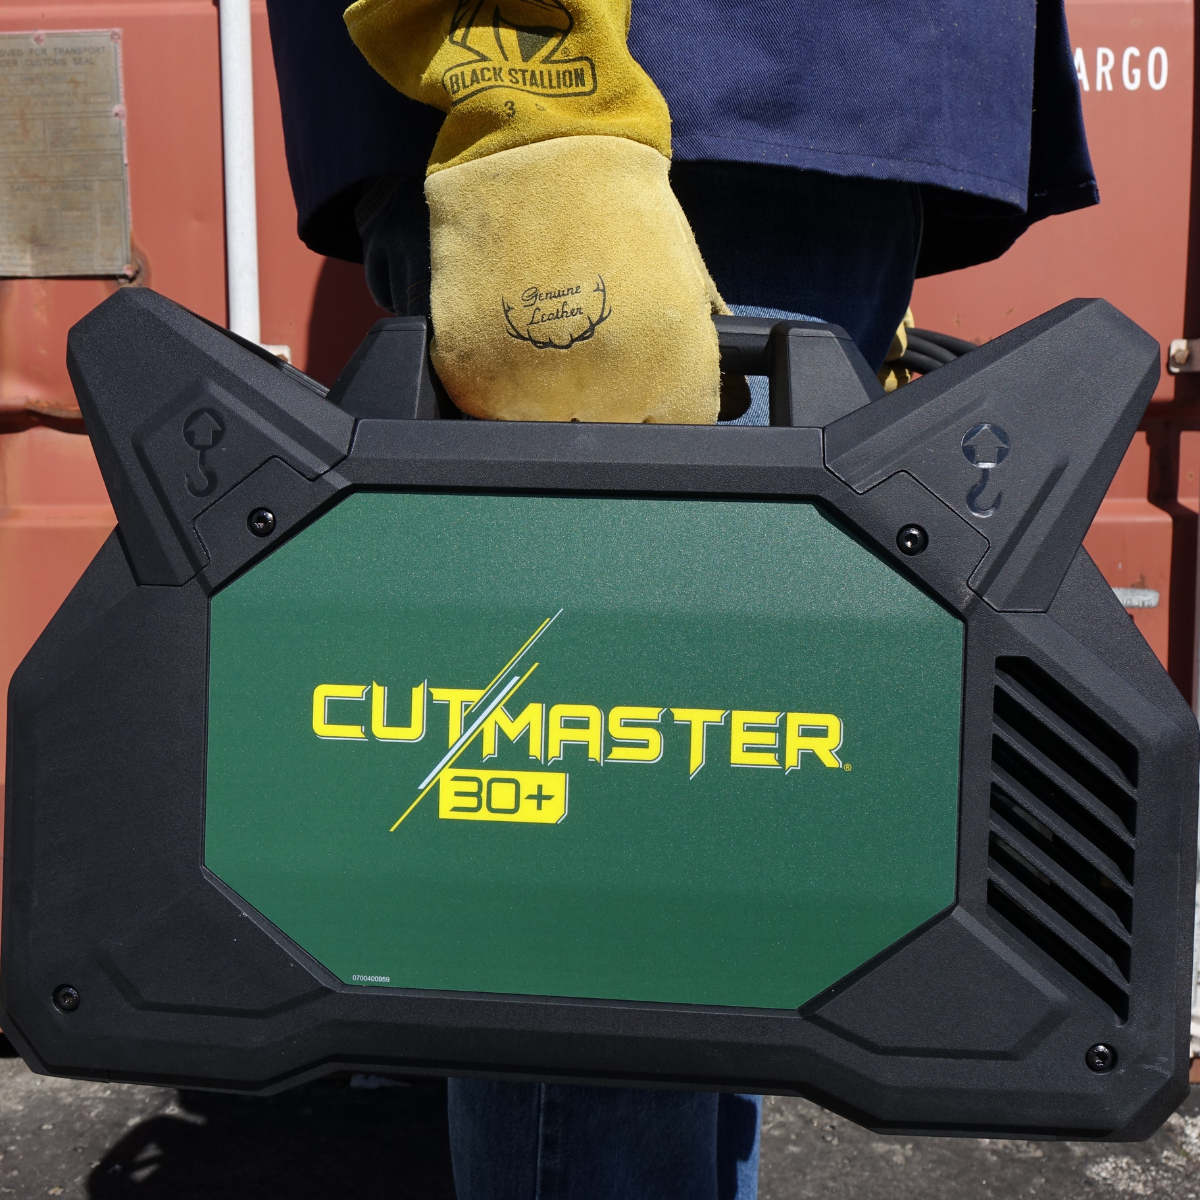 Thermal Dynamics Cutmaster 30+ Plasma Cutter - 1-3000-1